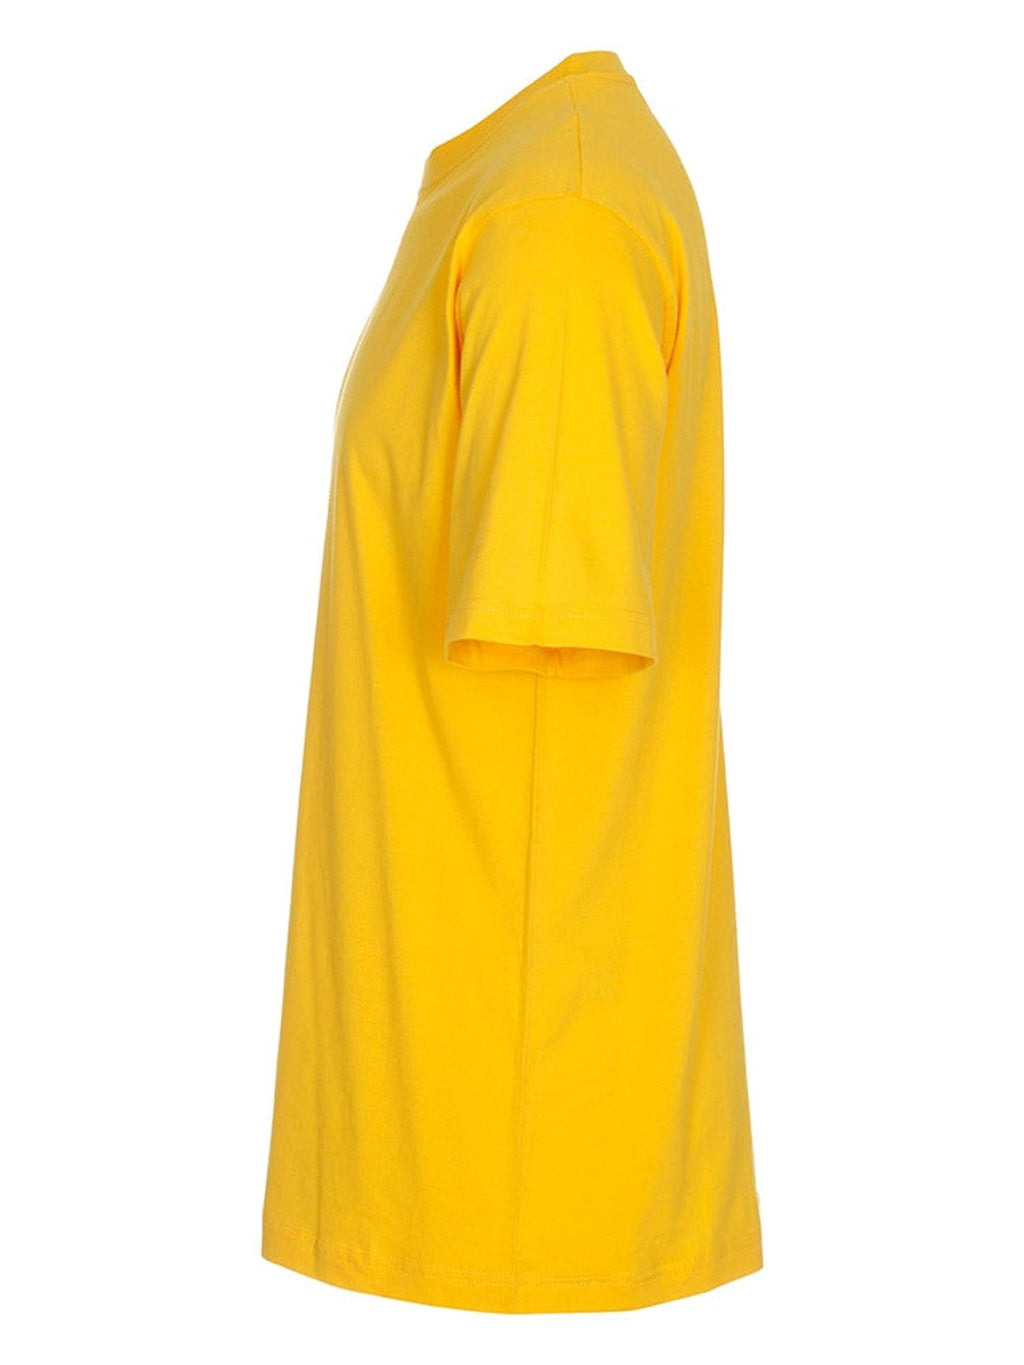 Oversized t-shirt - Yellow